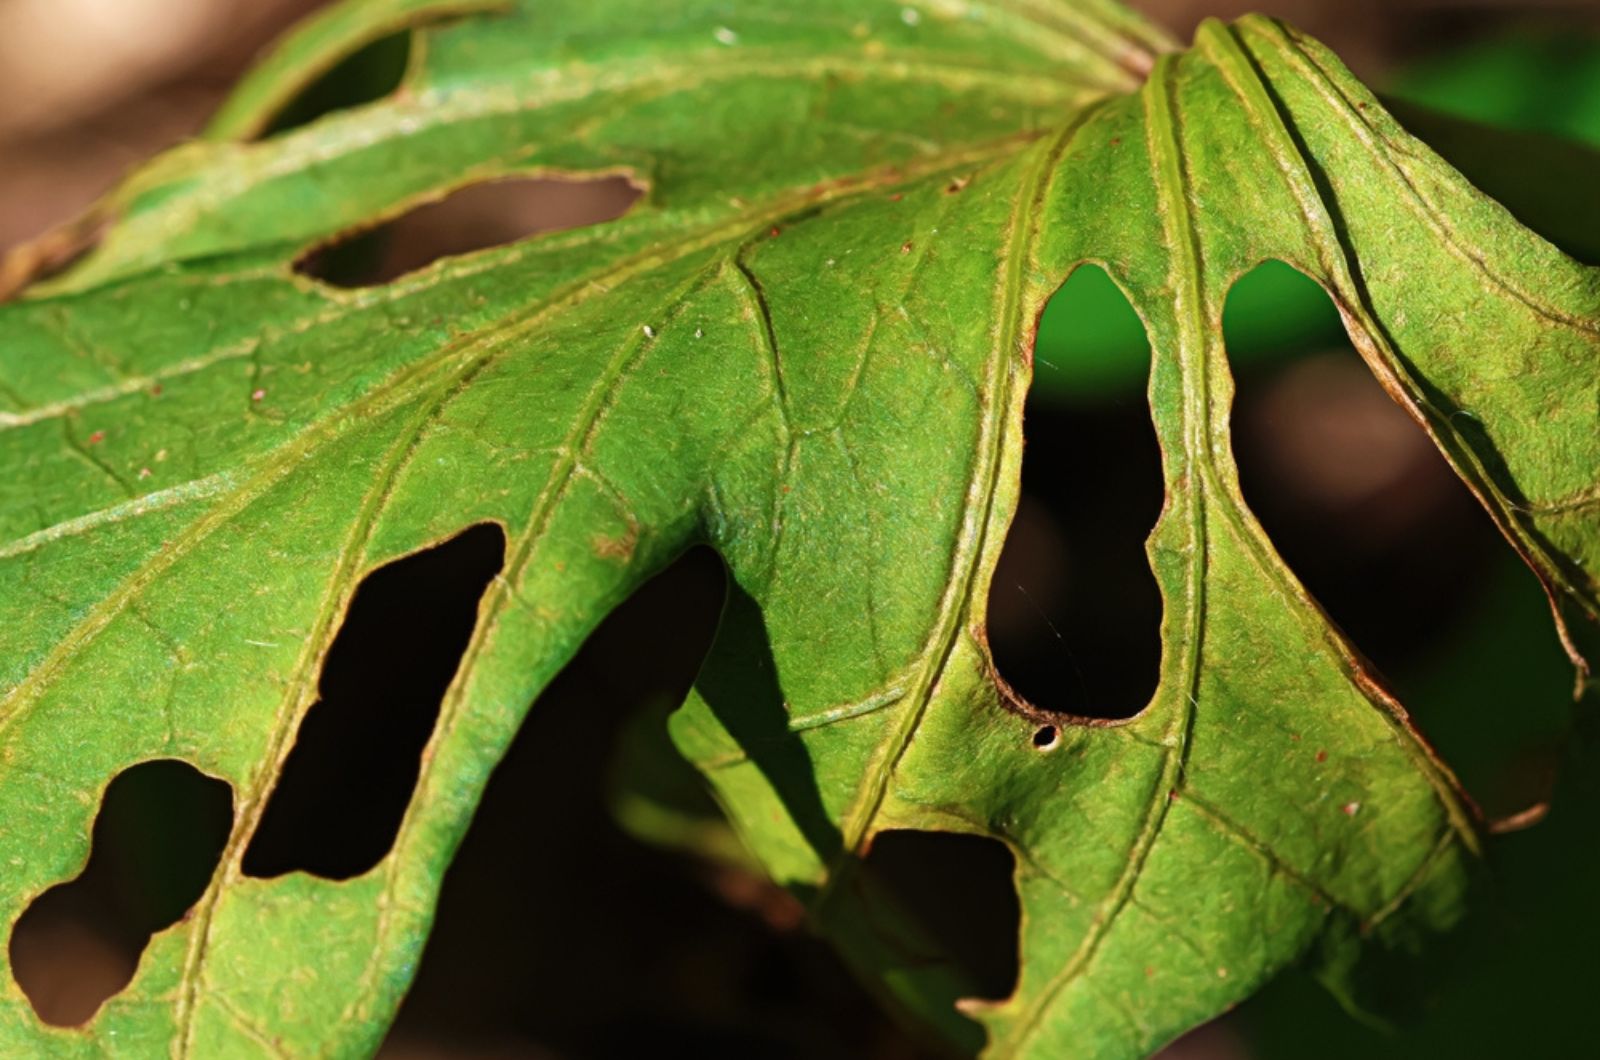 Chewed-Up leaf